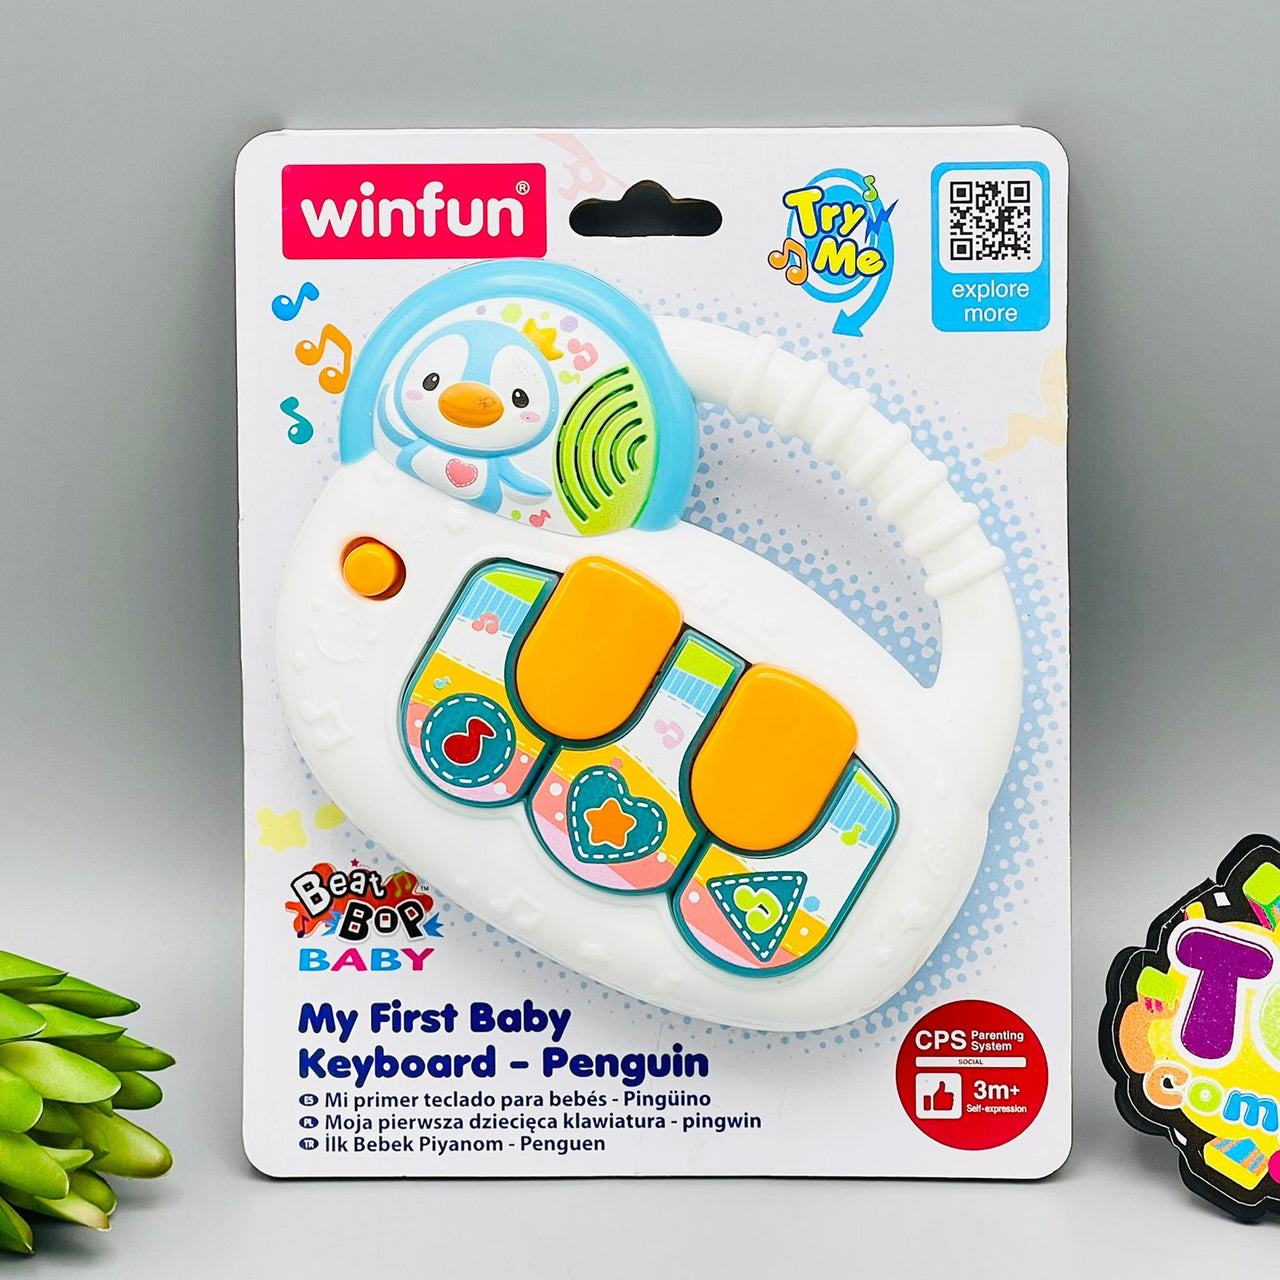 WinFun Baby's Keyboard-Penguin Toy